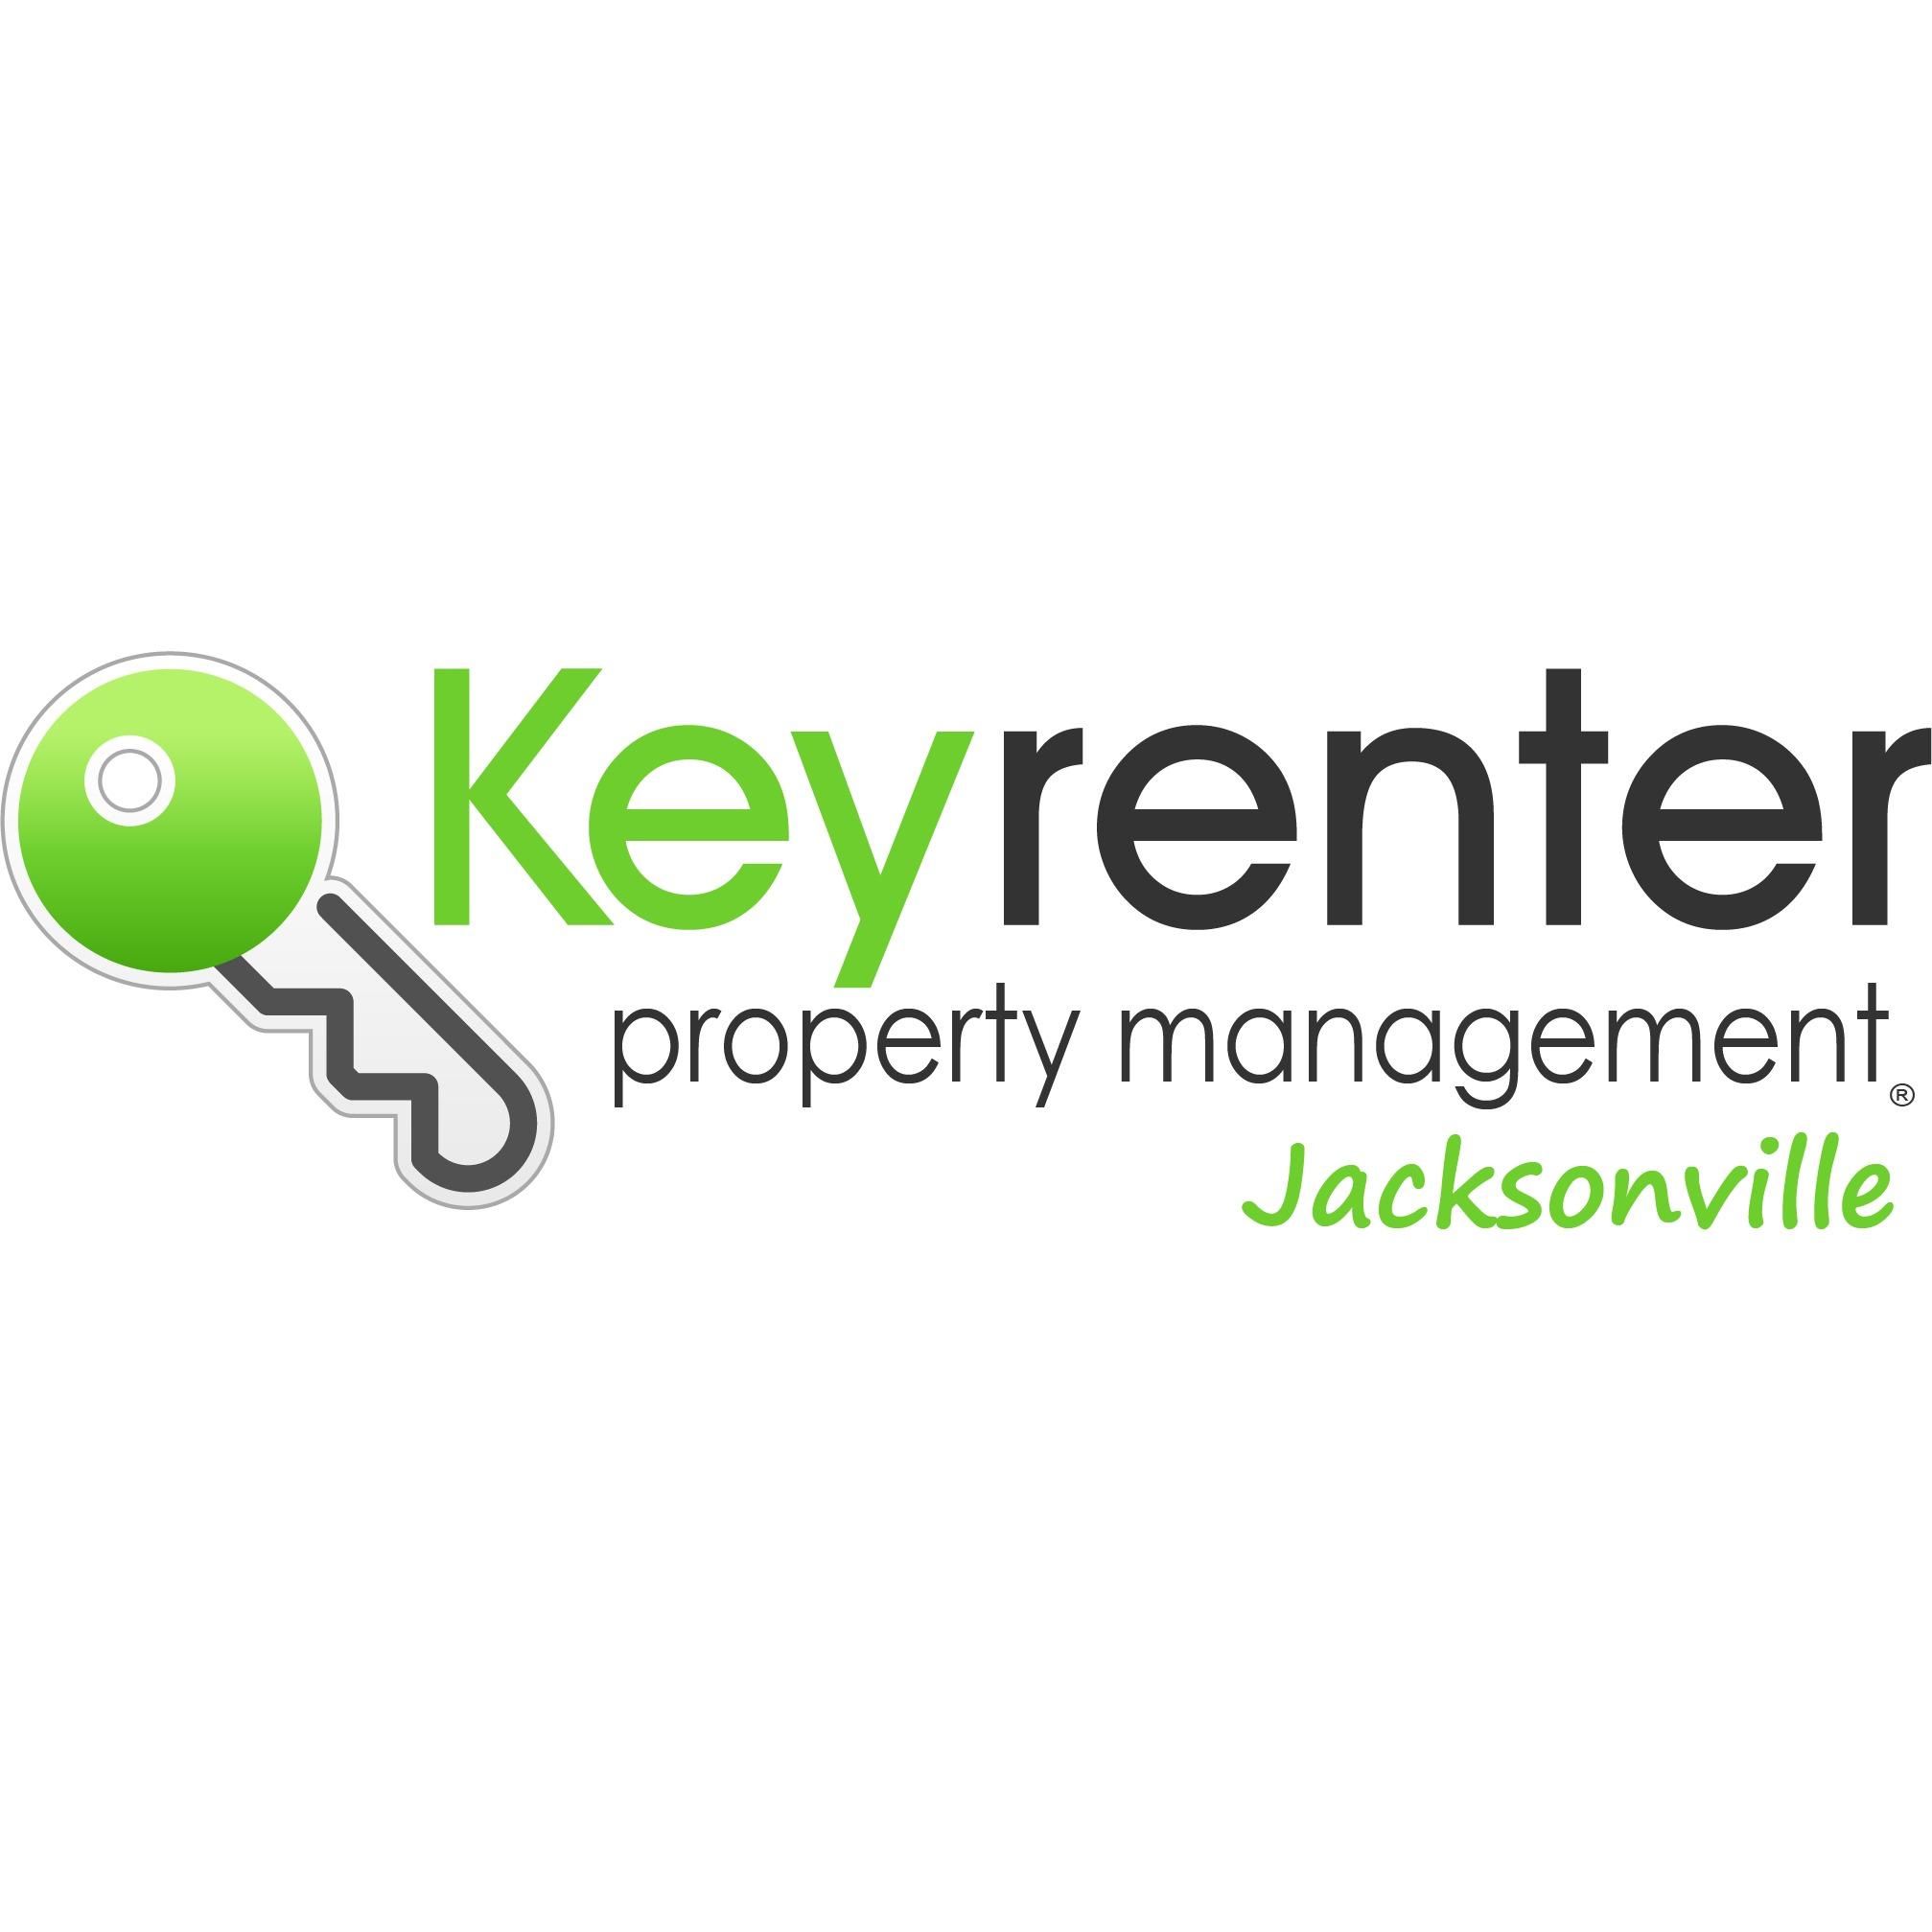 Keyrenter Jacksonville Property Management Logo